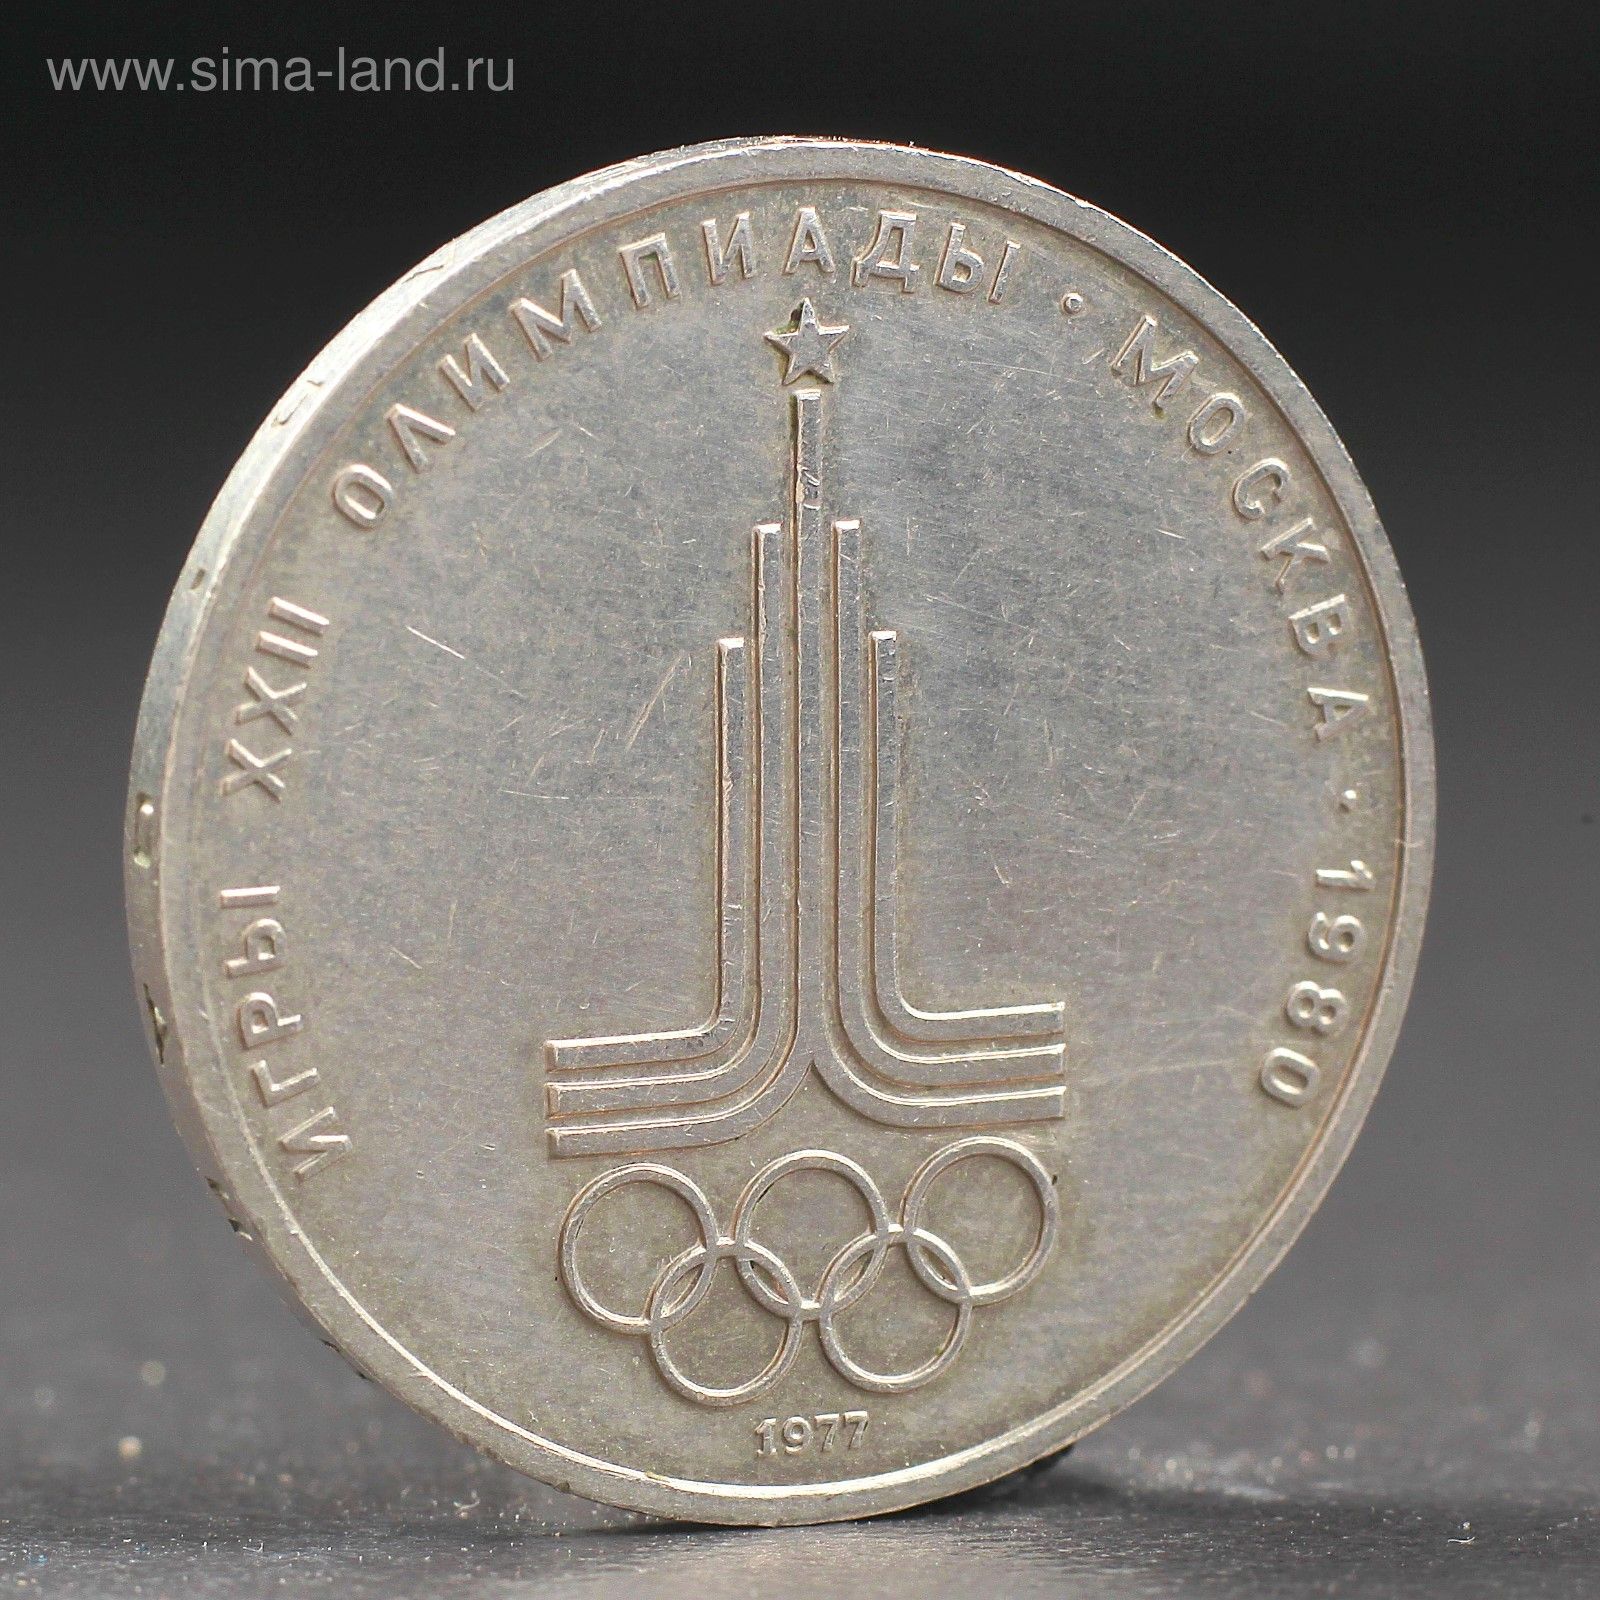 7 рублей в 80. Монета СССР 1 рубль 1980 года Олимпийский. Монета 1 рубль 1977 года. Олимпийский рубль 1977.